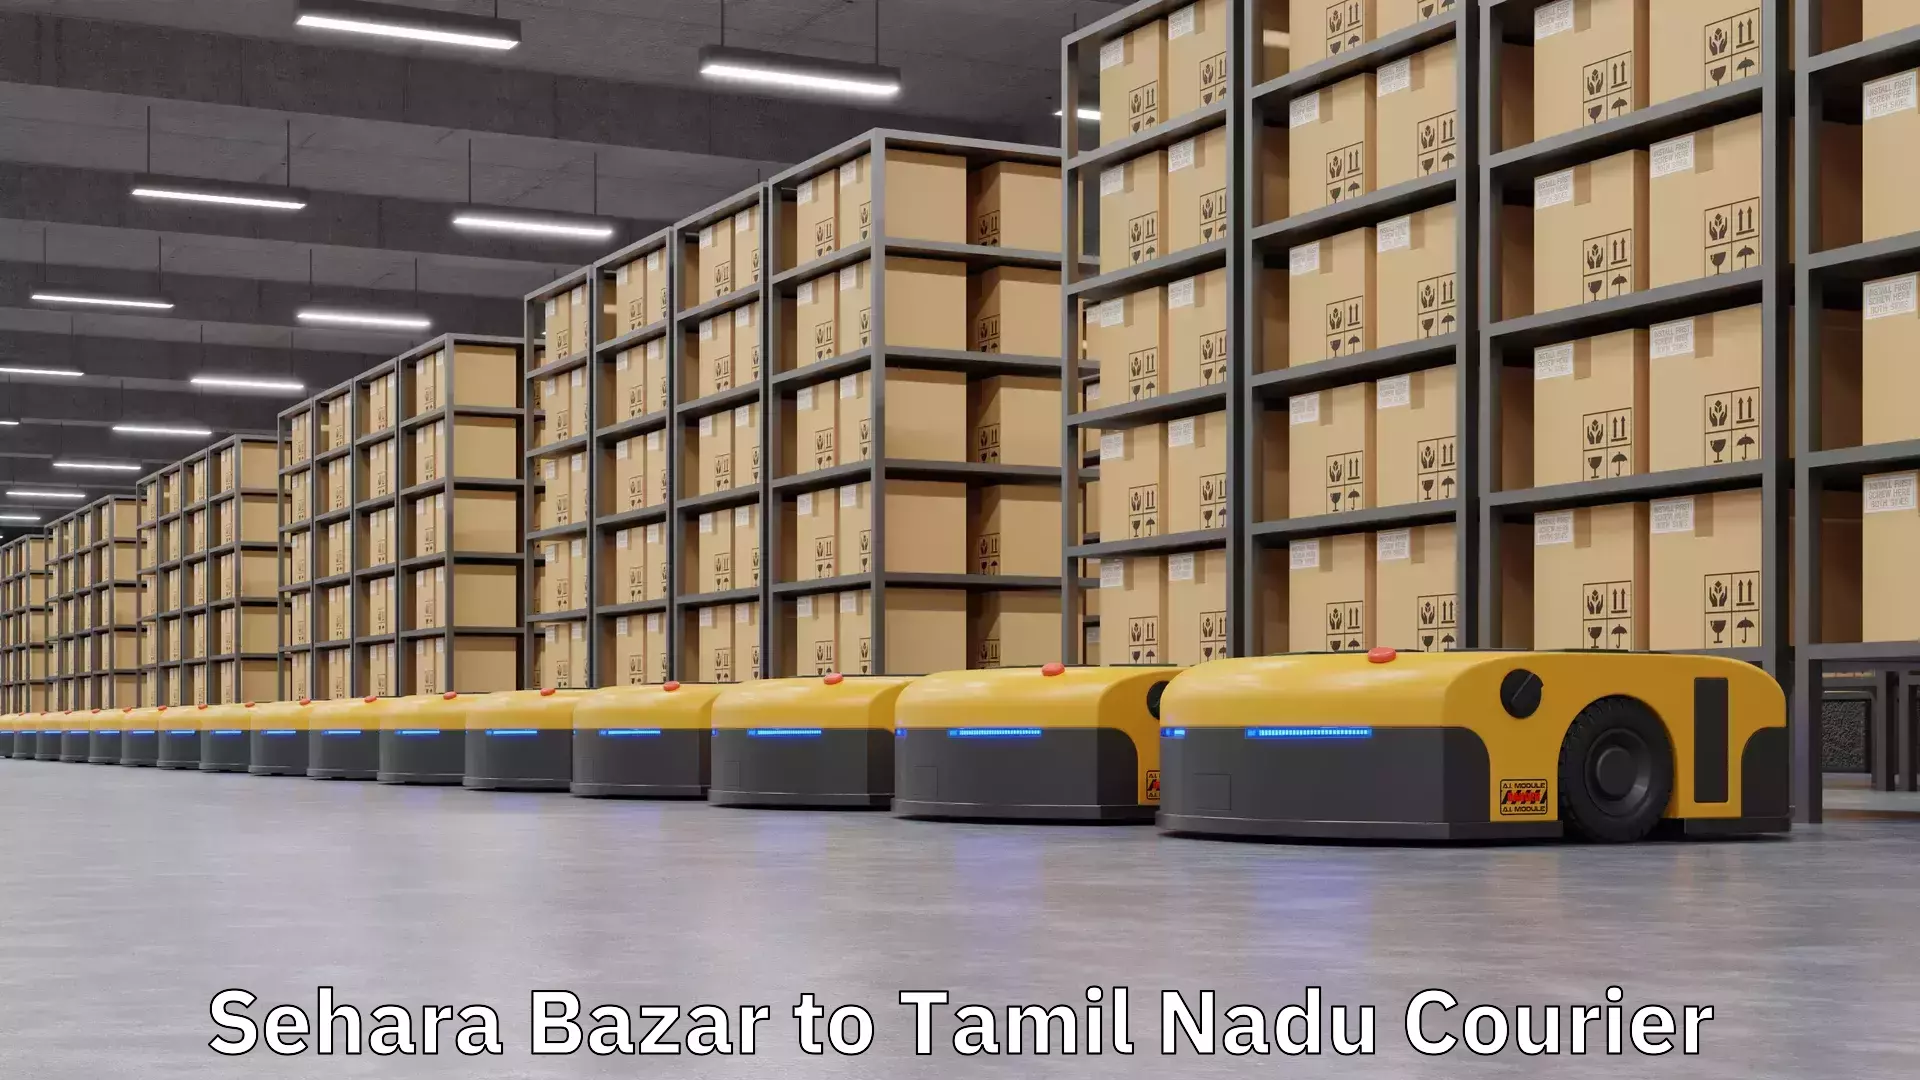 Modern delivery methods Sehara Bazar to Tamil Nadu